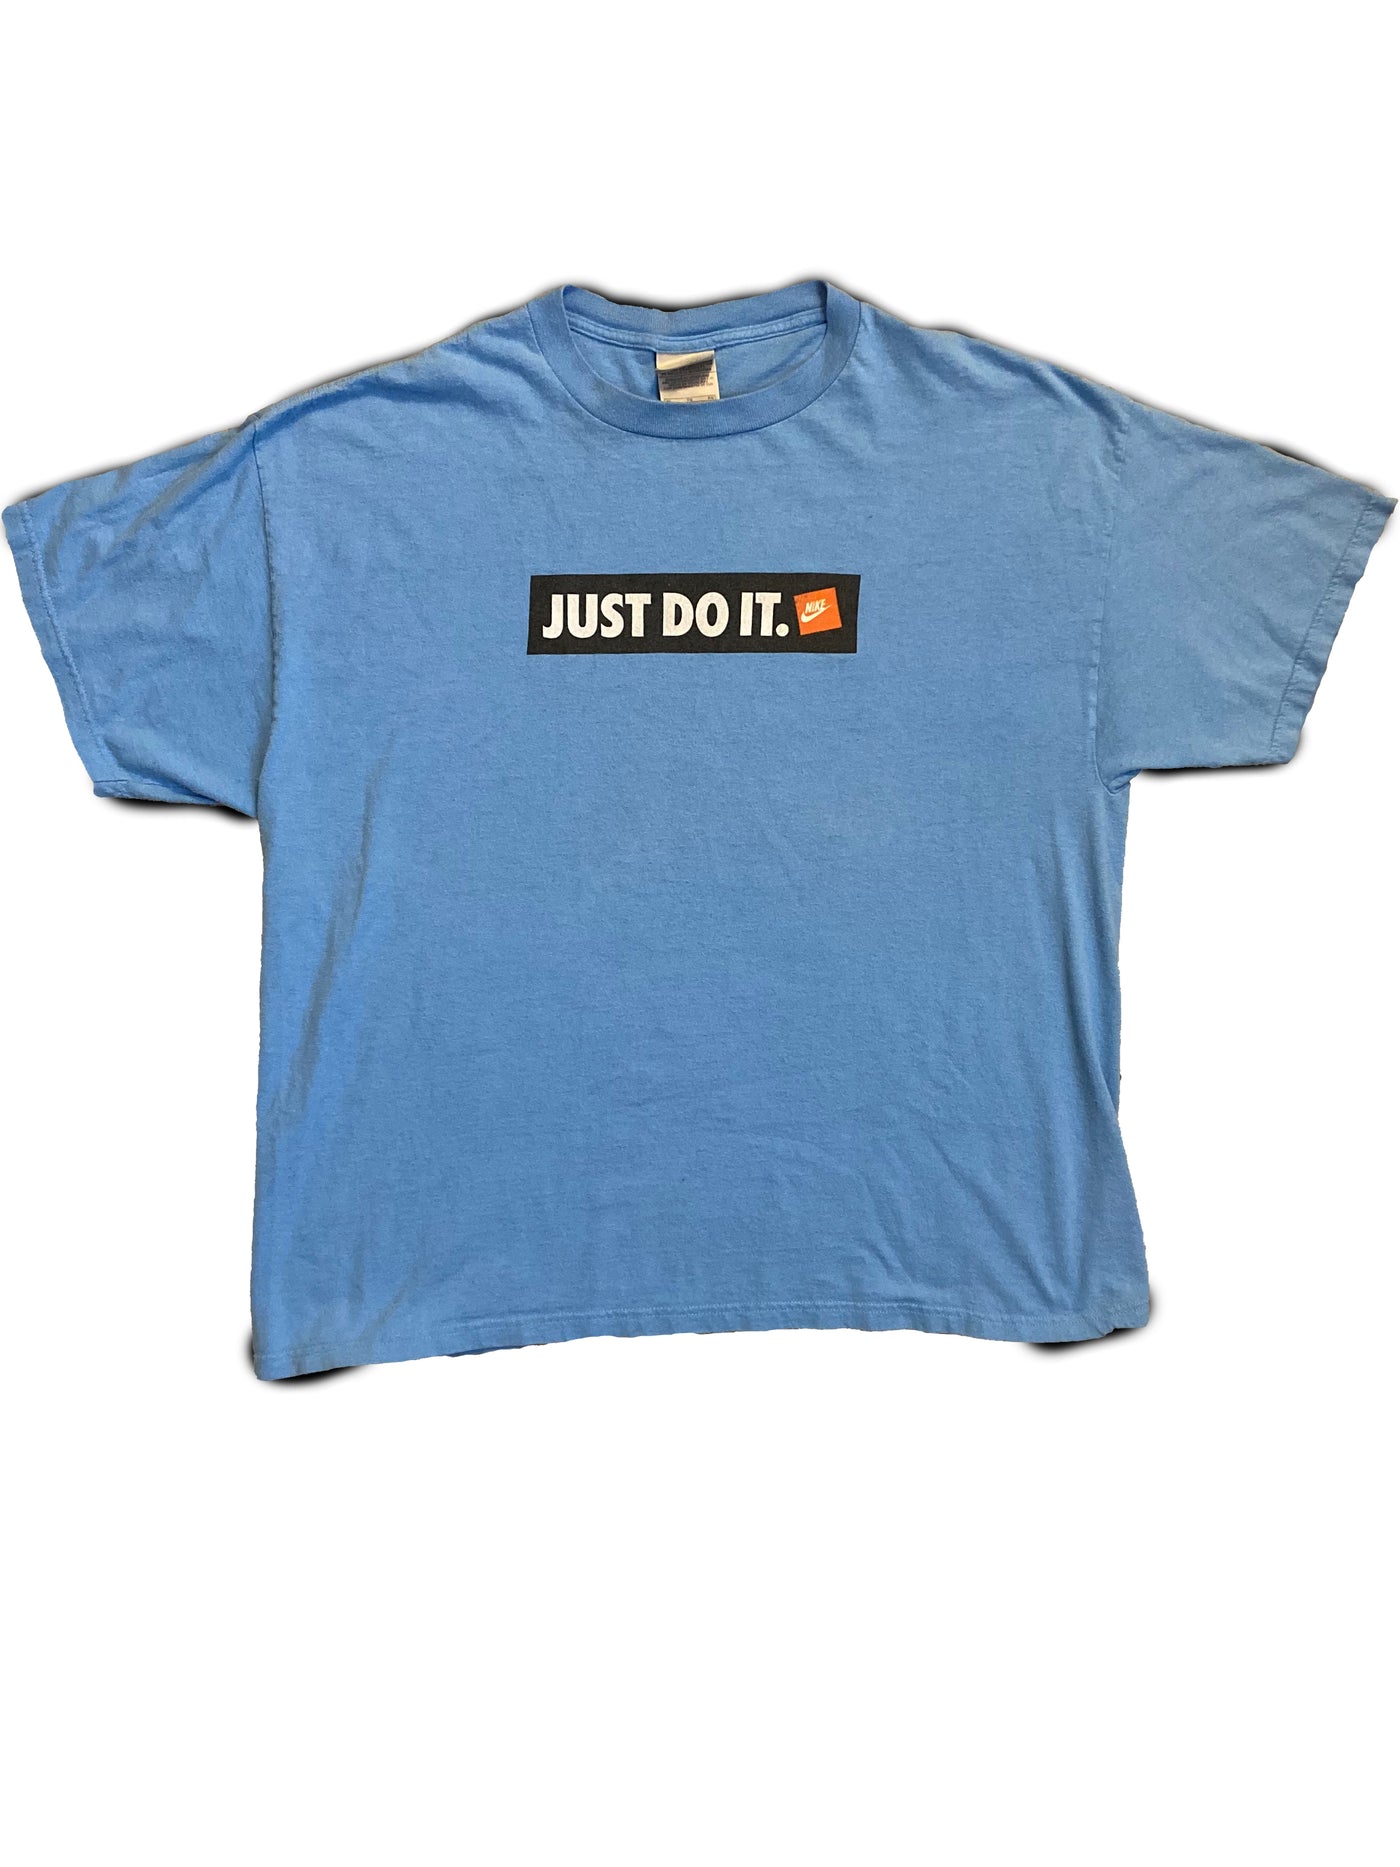 Vintage 90's Nike 'Just Do It' T-Shirt (Tar Heel Blue)